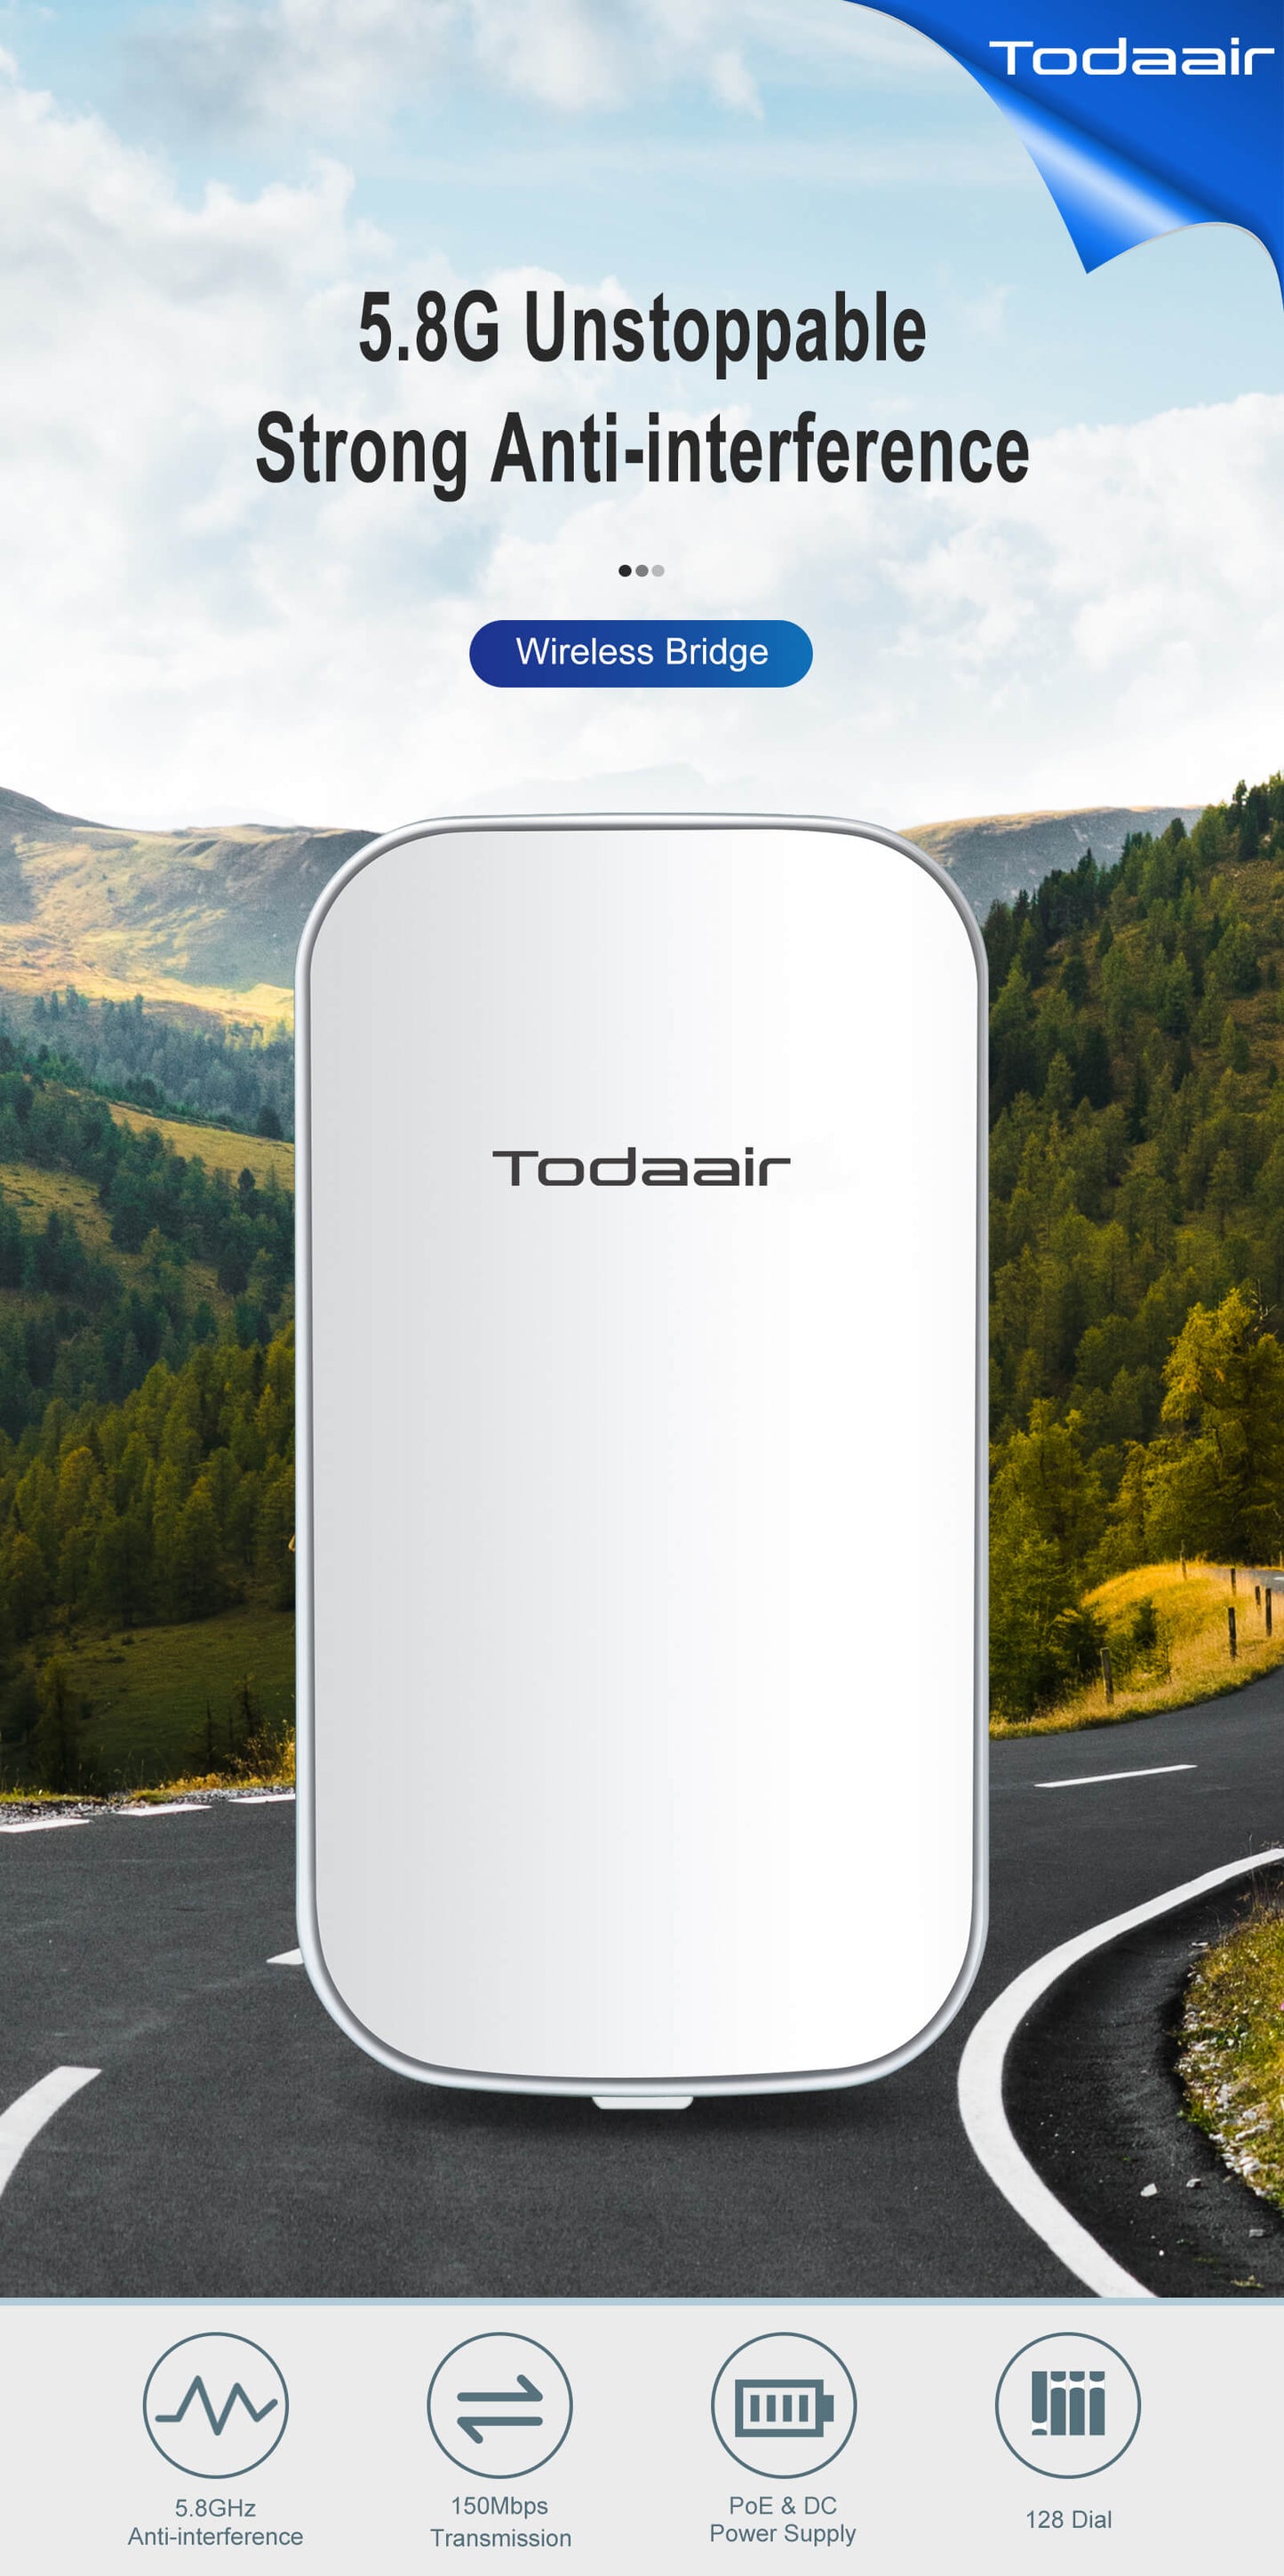 Todaair 5.8G wireless bridge